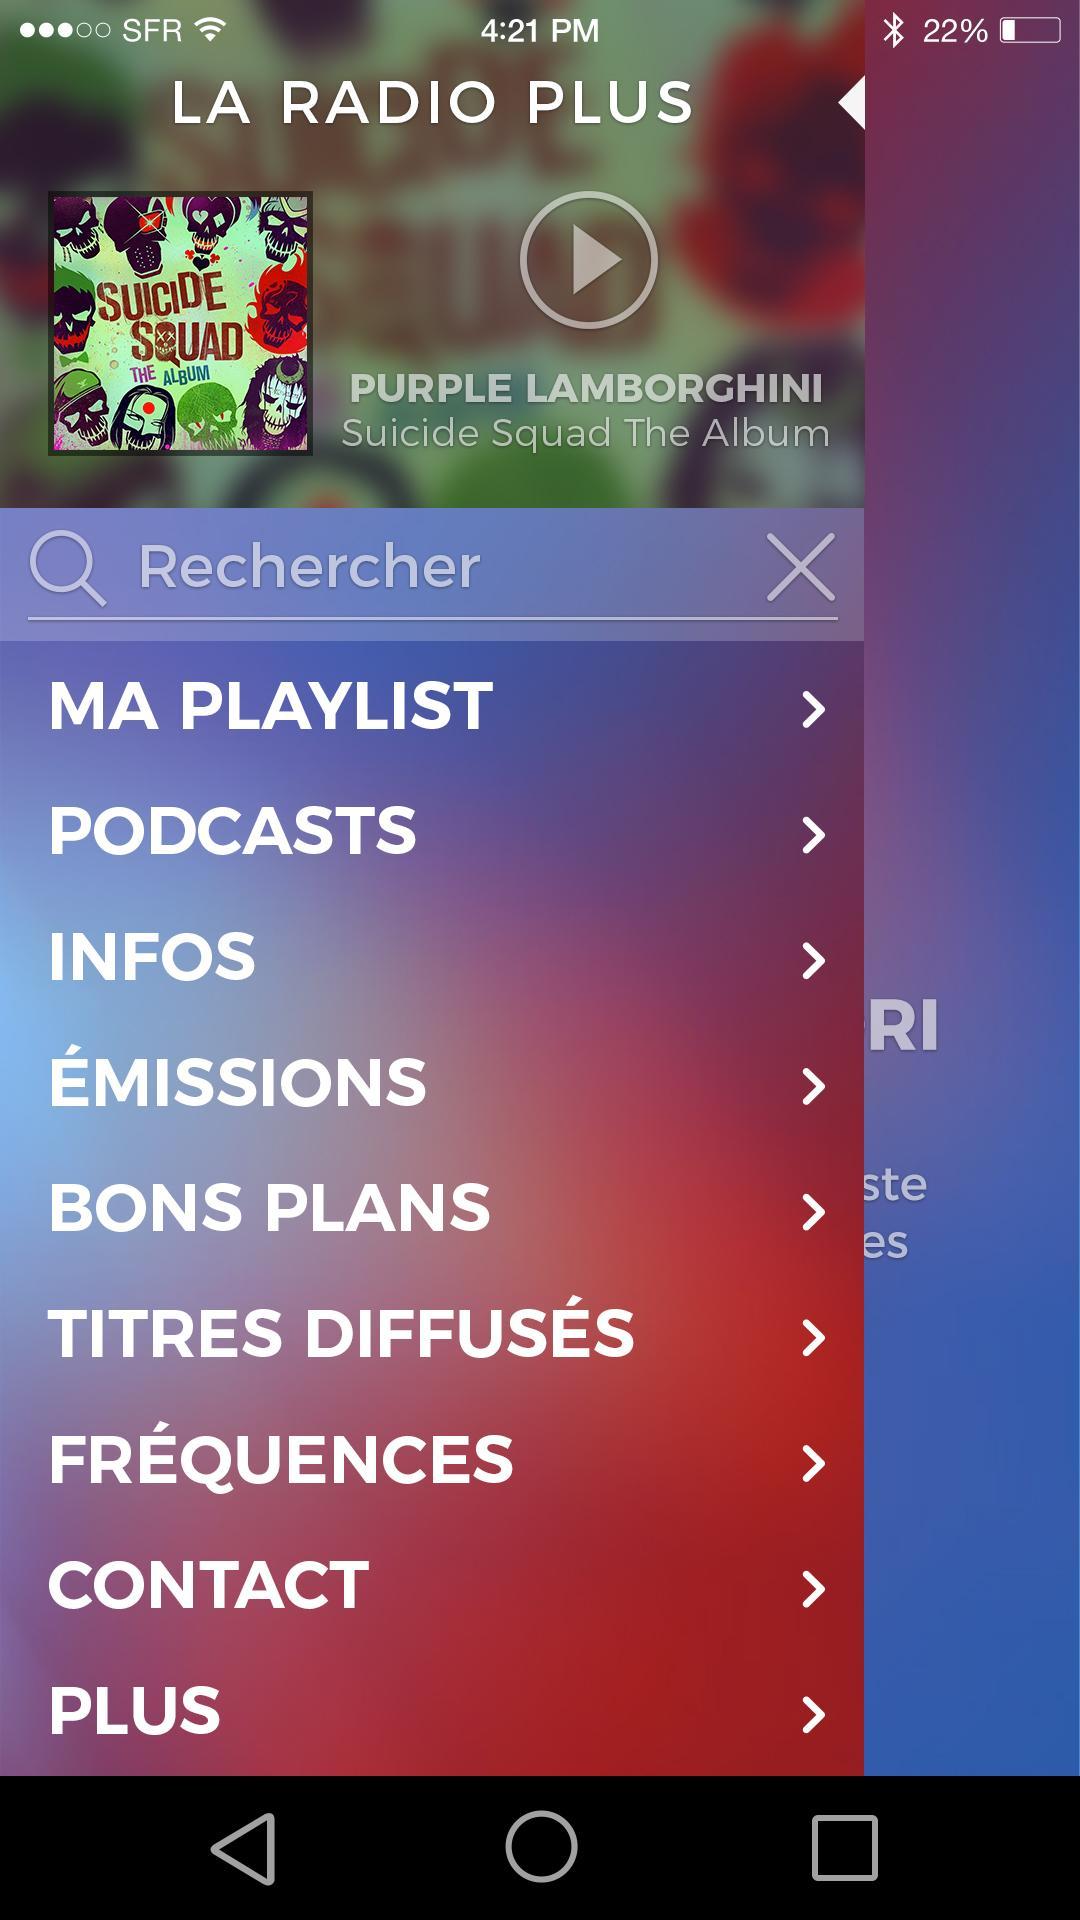 La Radio Plus for Android - APK Download